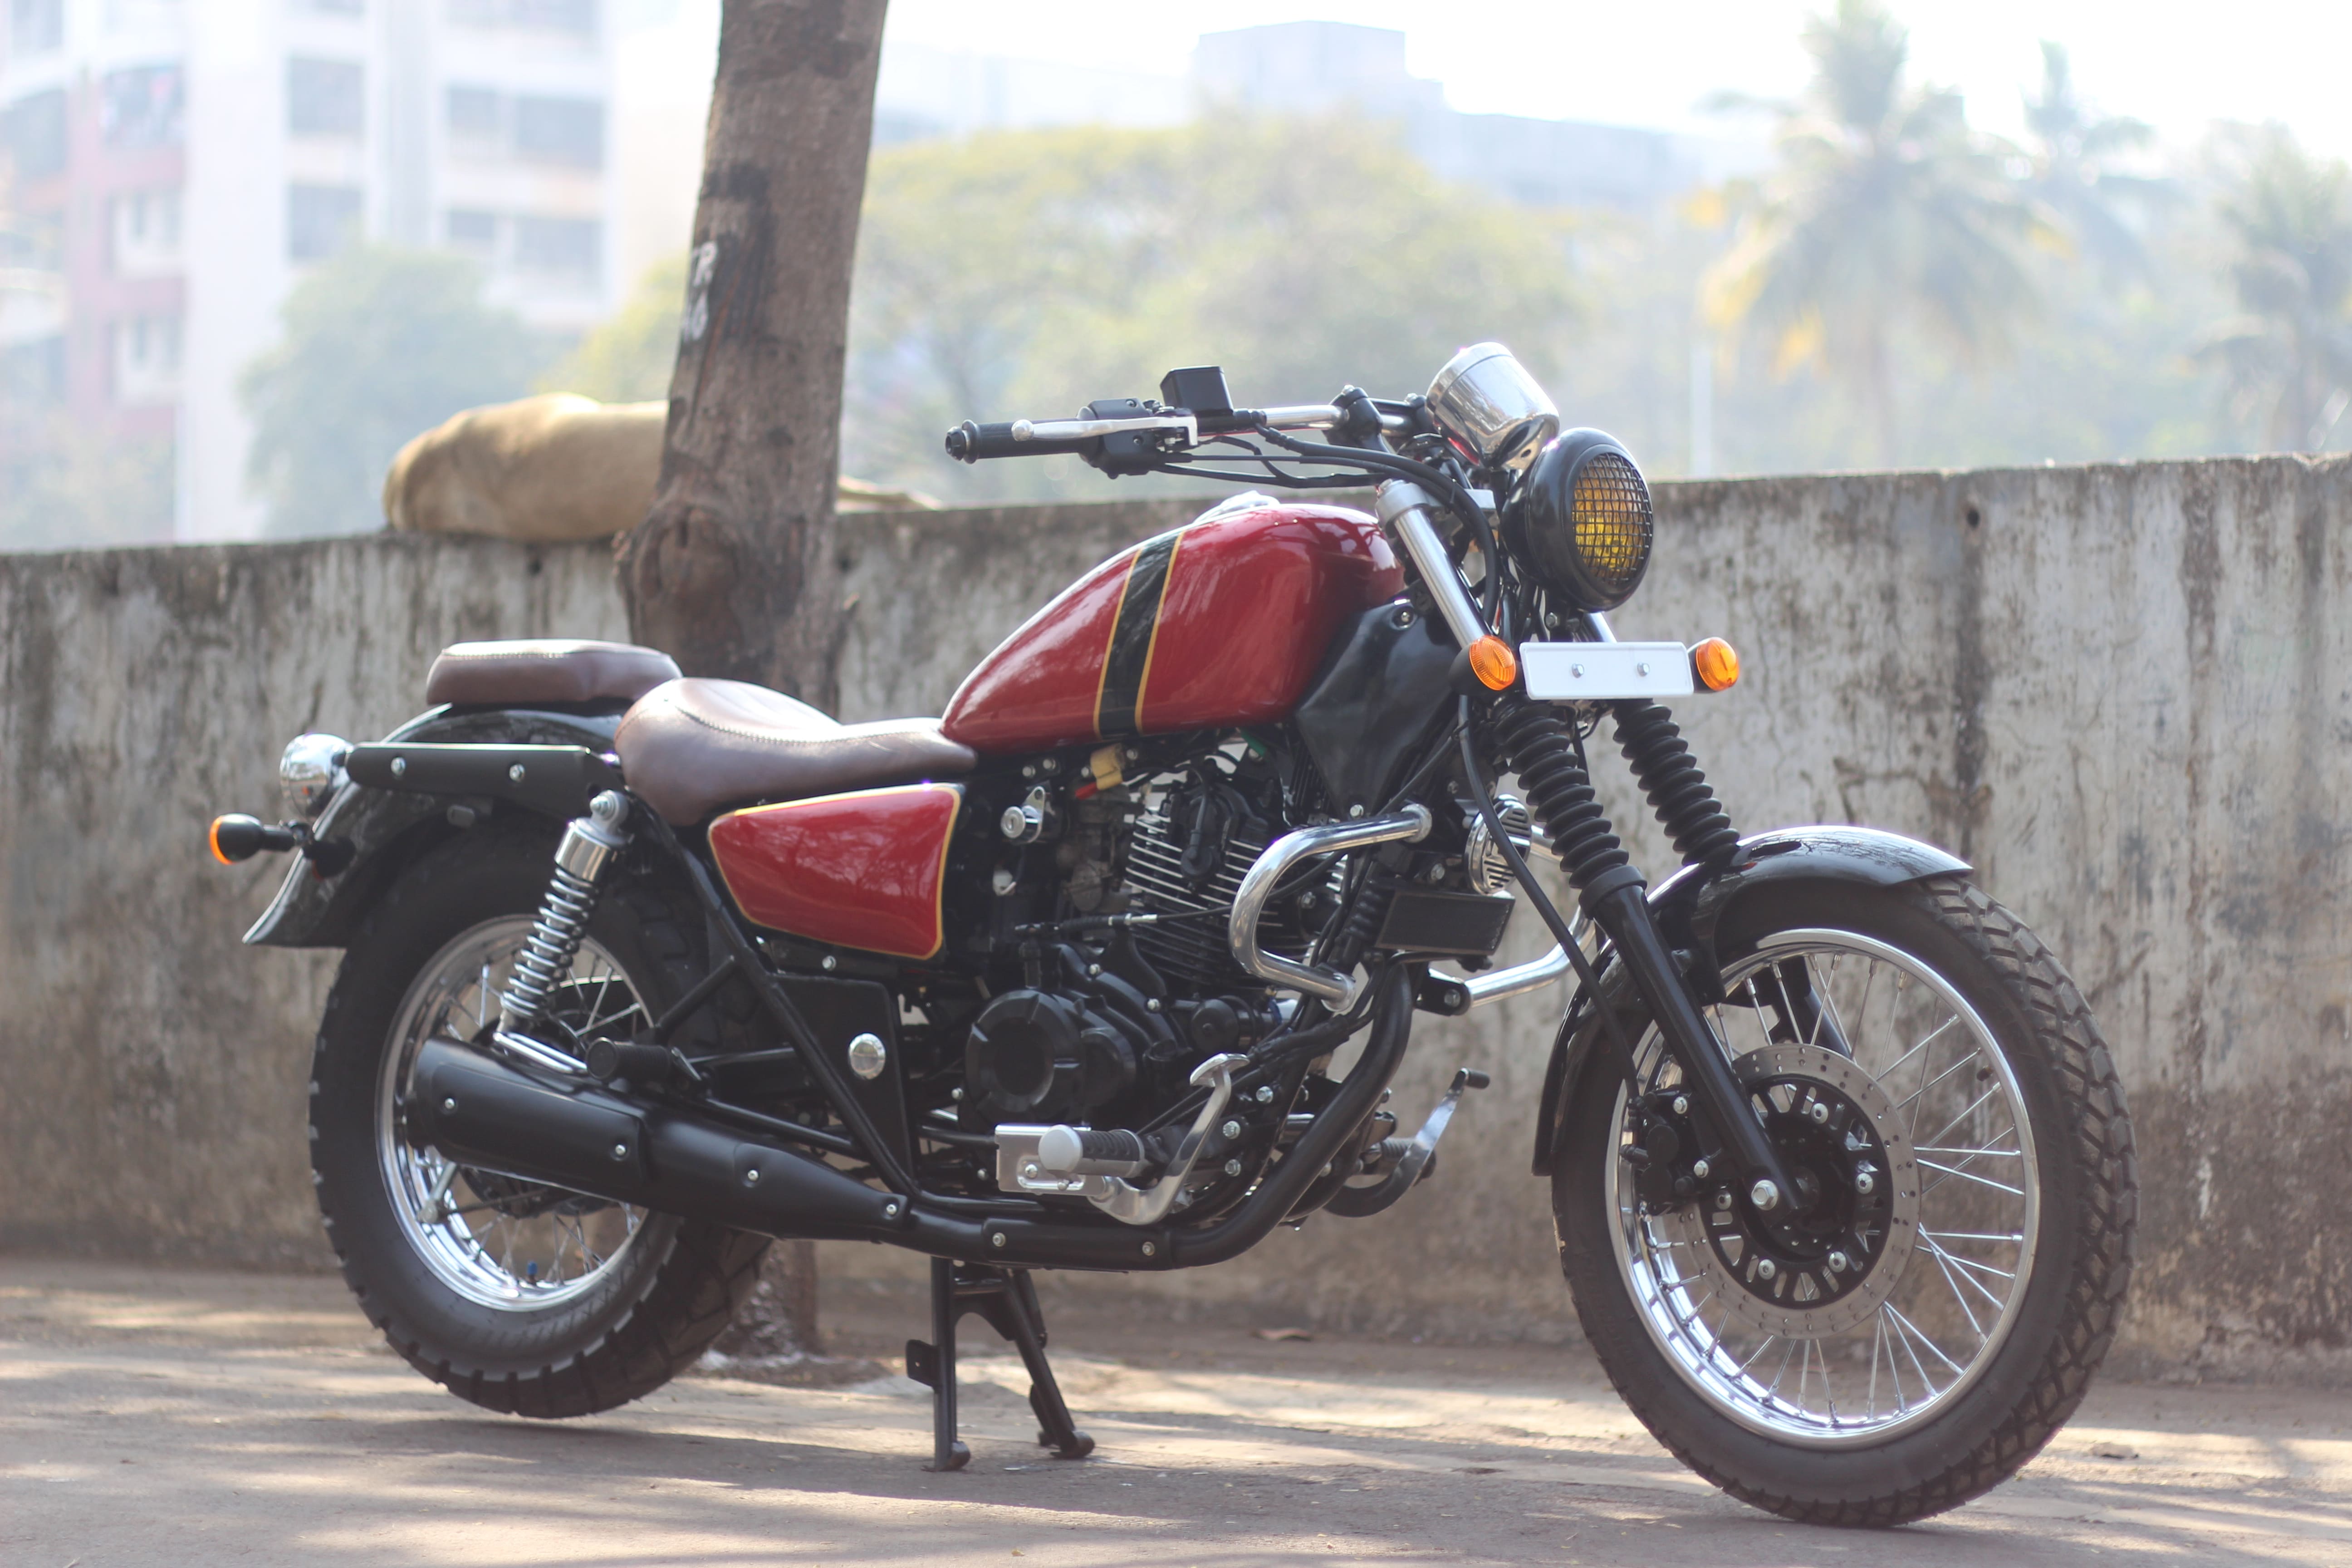 Meet Perfectly-Modified Bajaj Avenger Cruiser Motorcycle by JEDI Customs - image